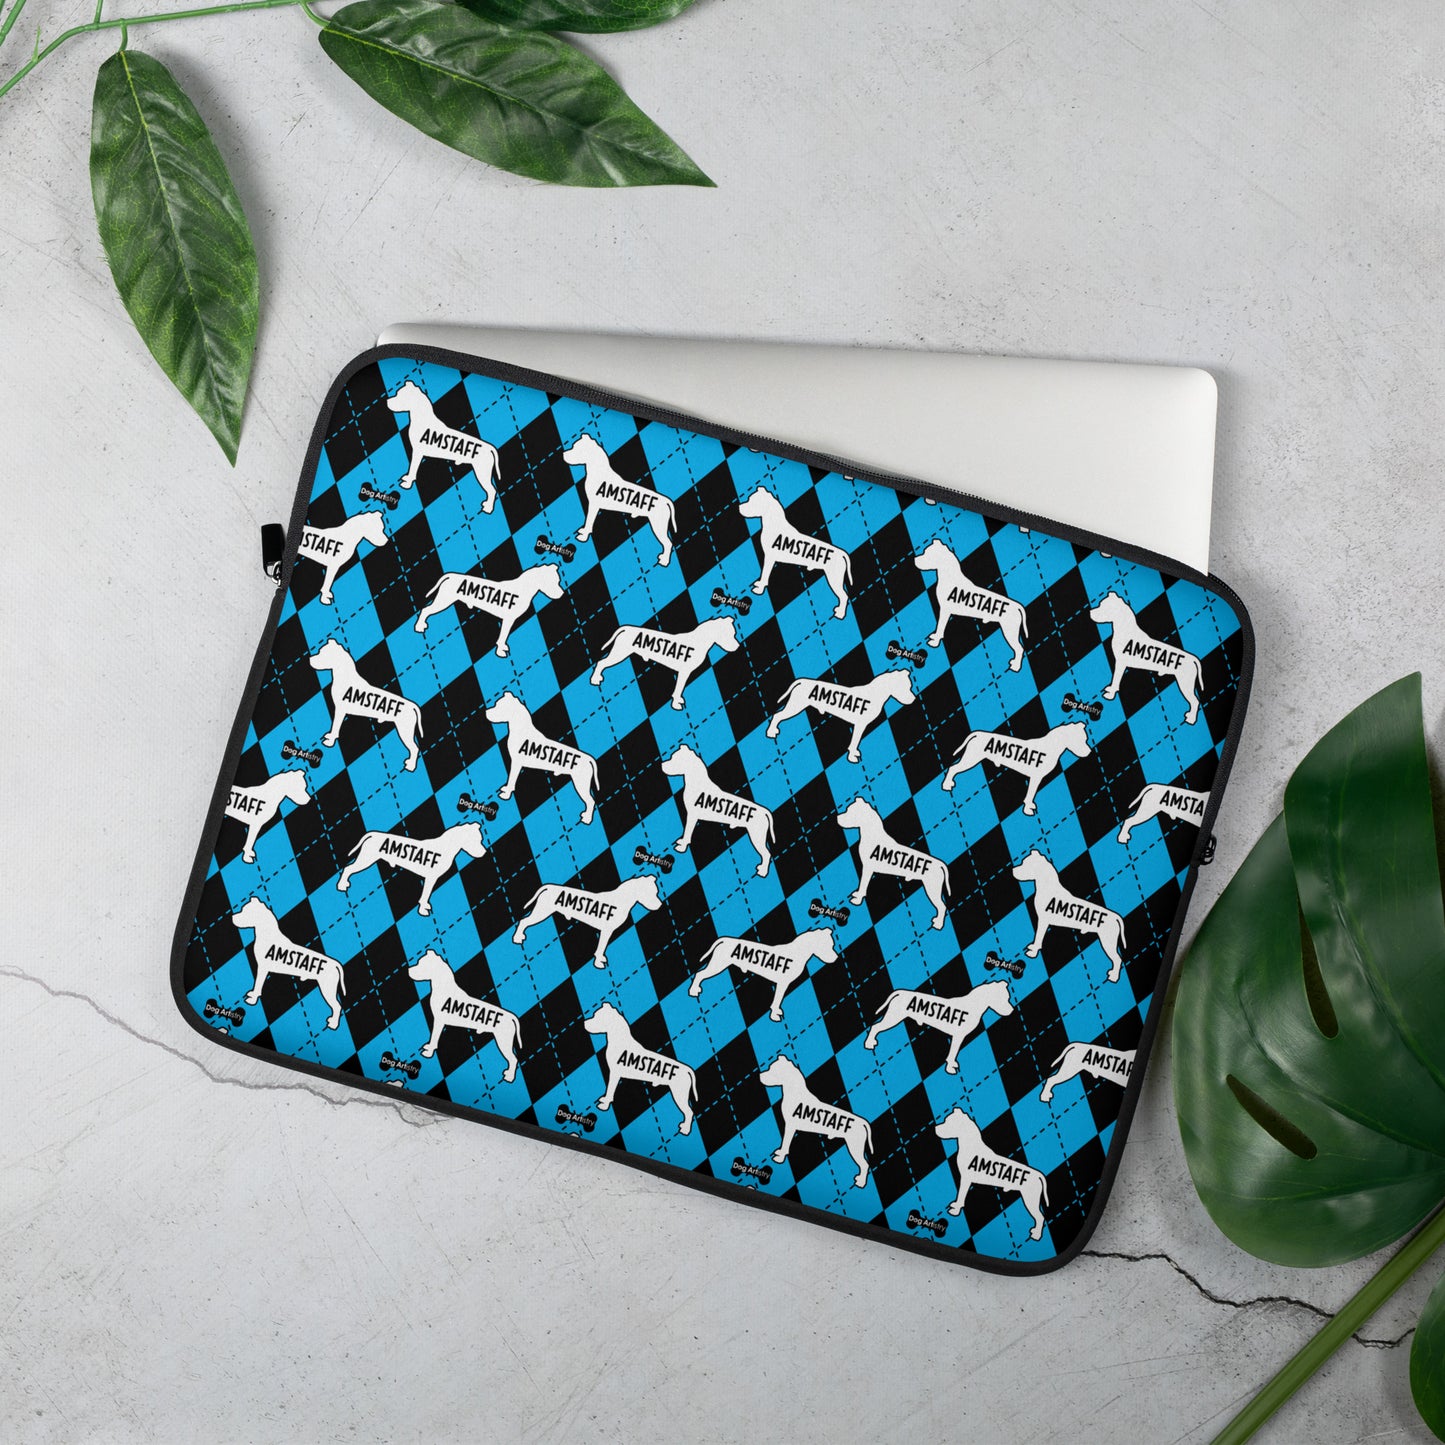 Amstaff blue and black argyle laptop sleeve by Dog Artistry